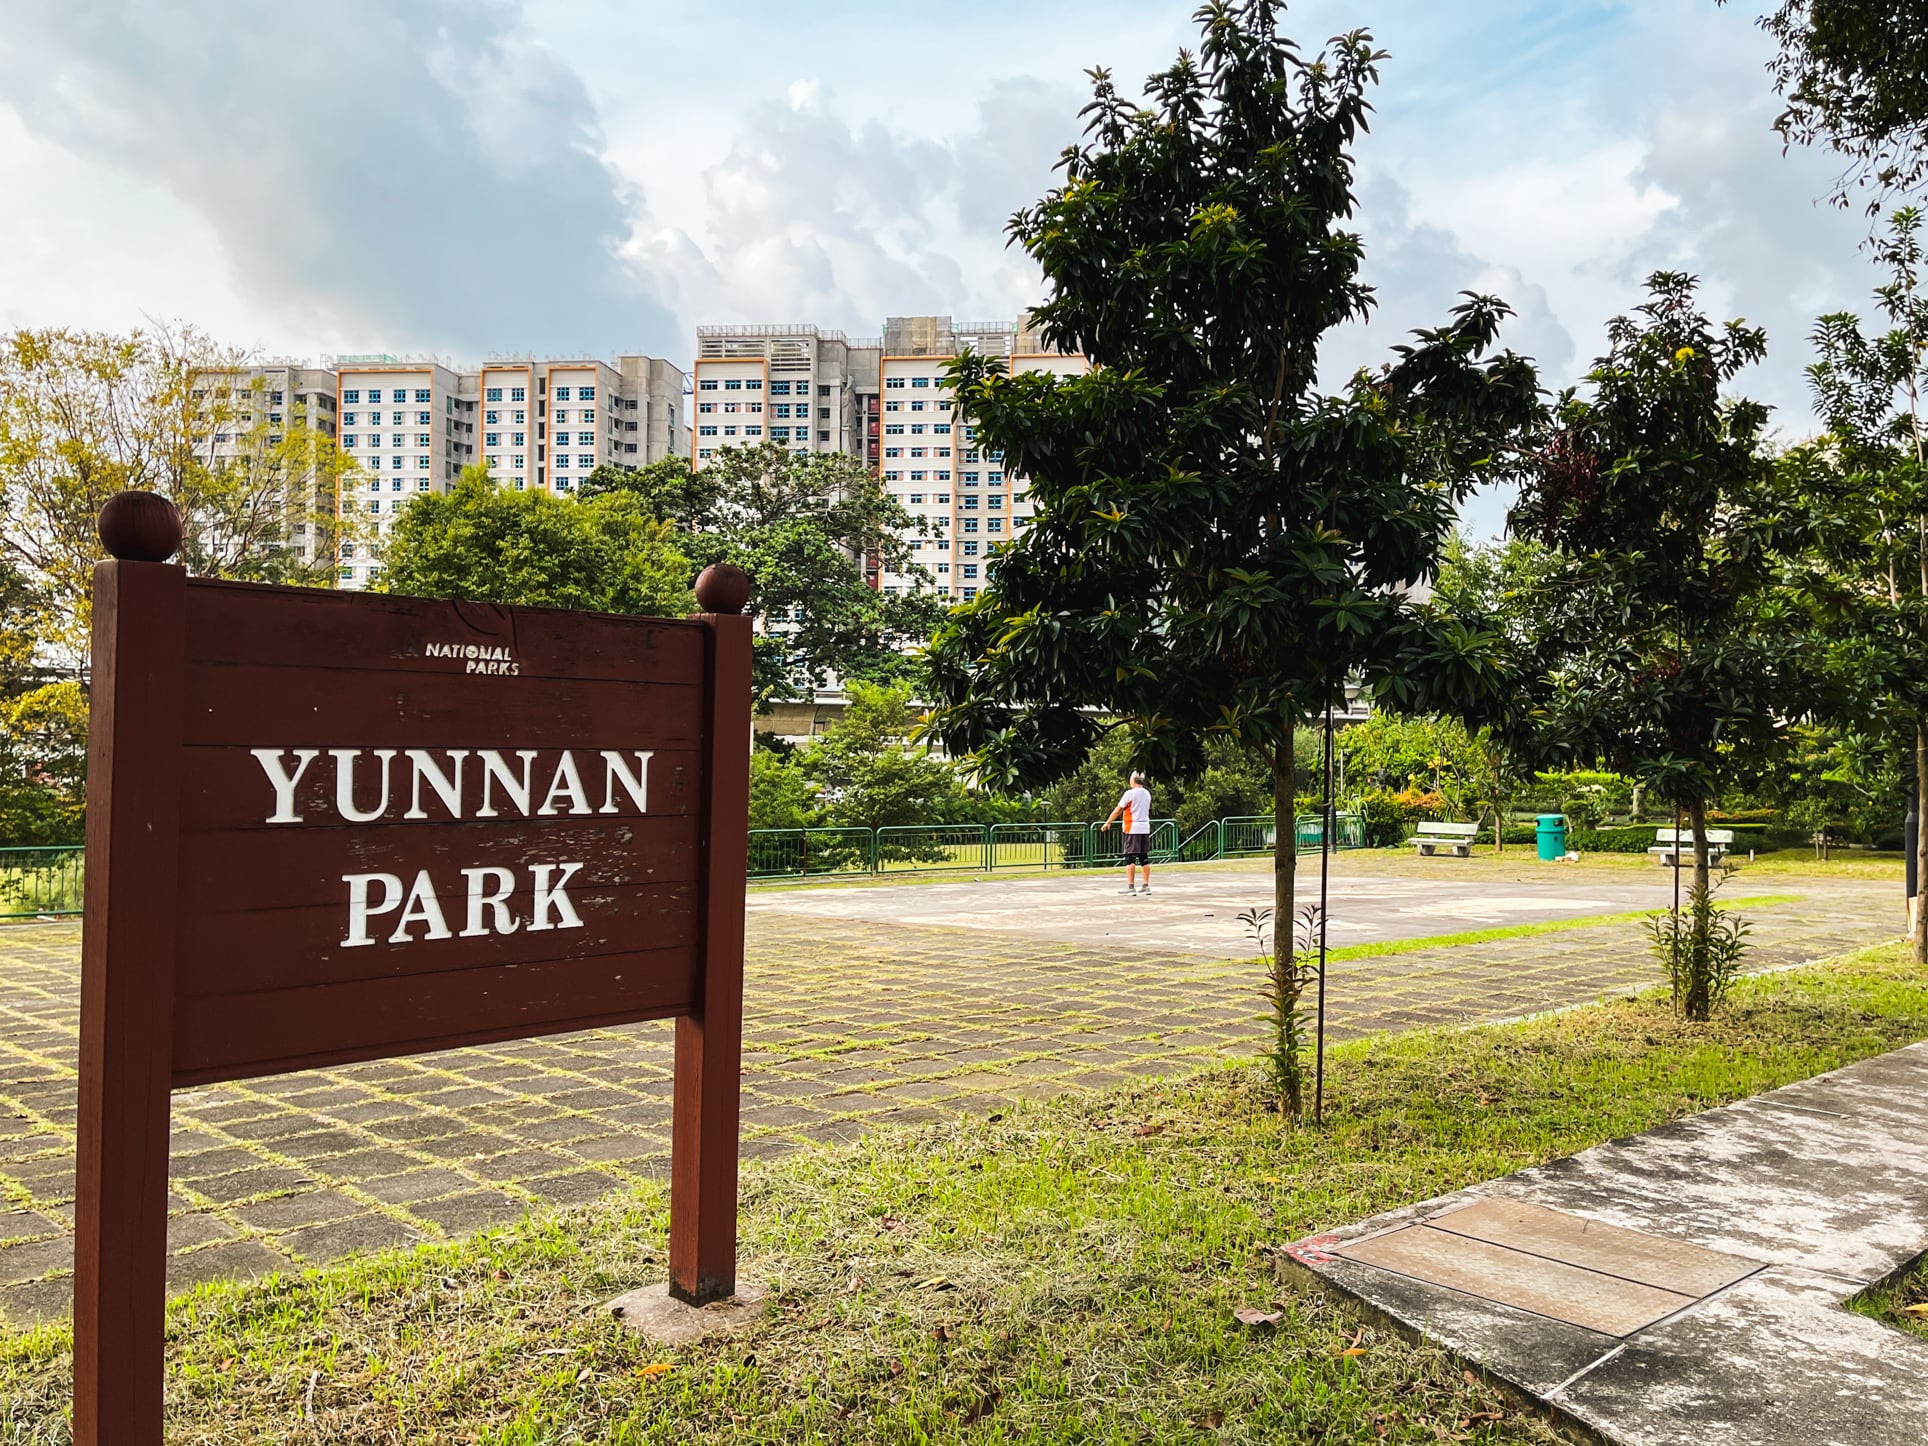 yunnan gardens landed park 1